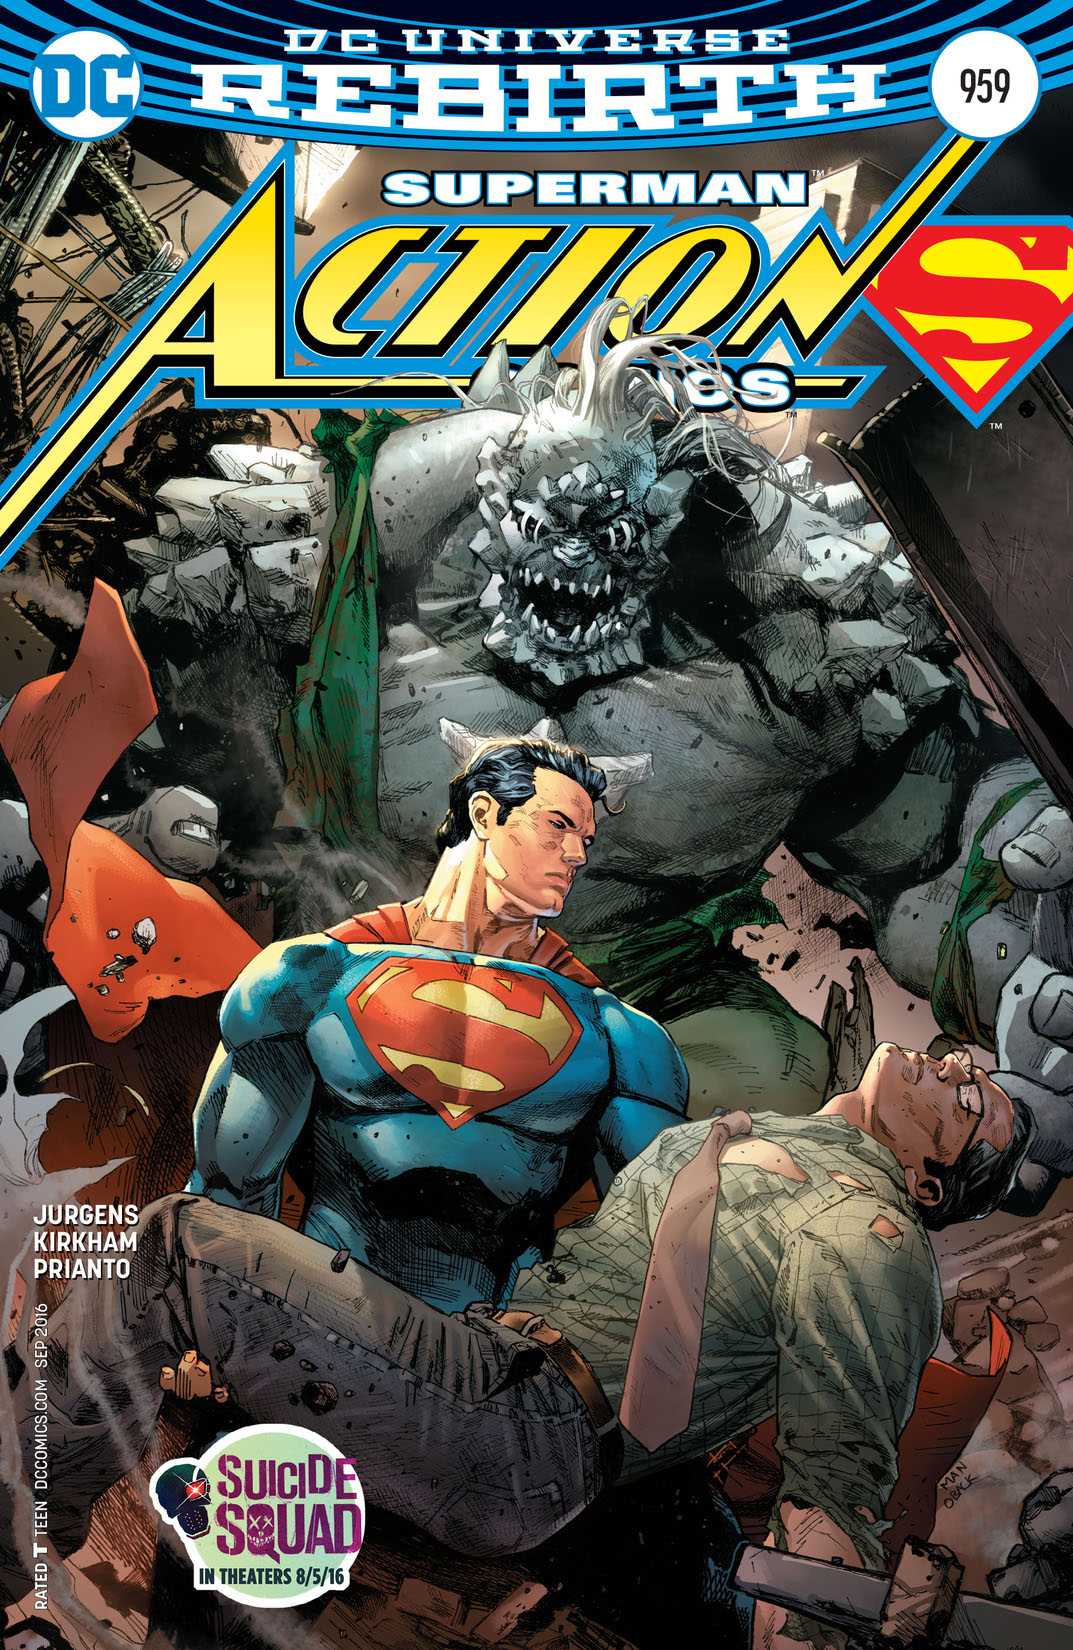 Action Comics (2016-) #959 preview images